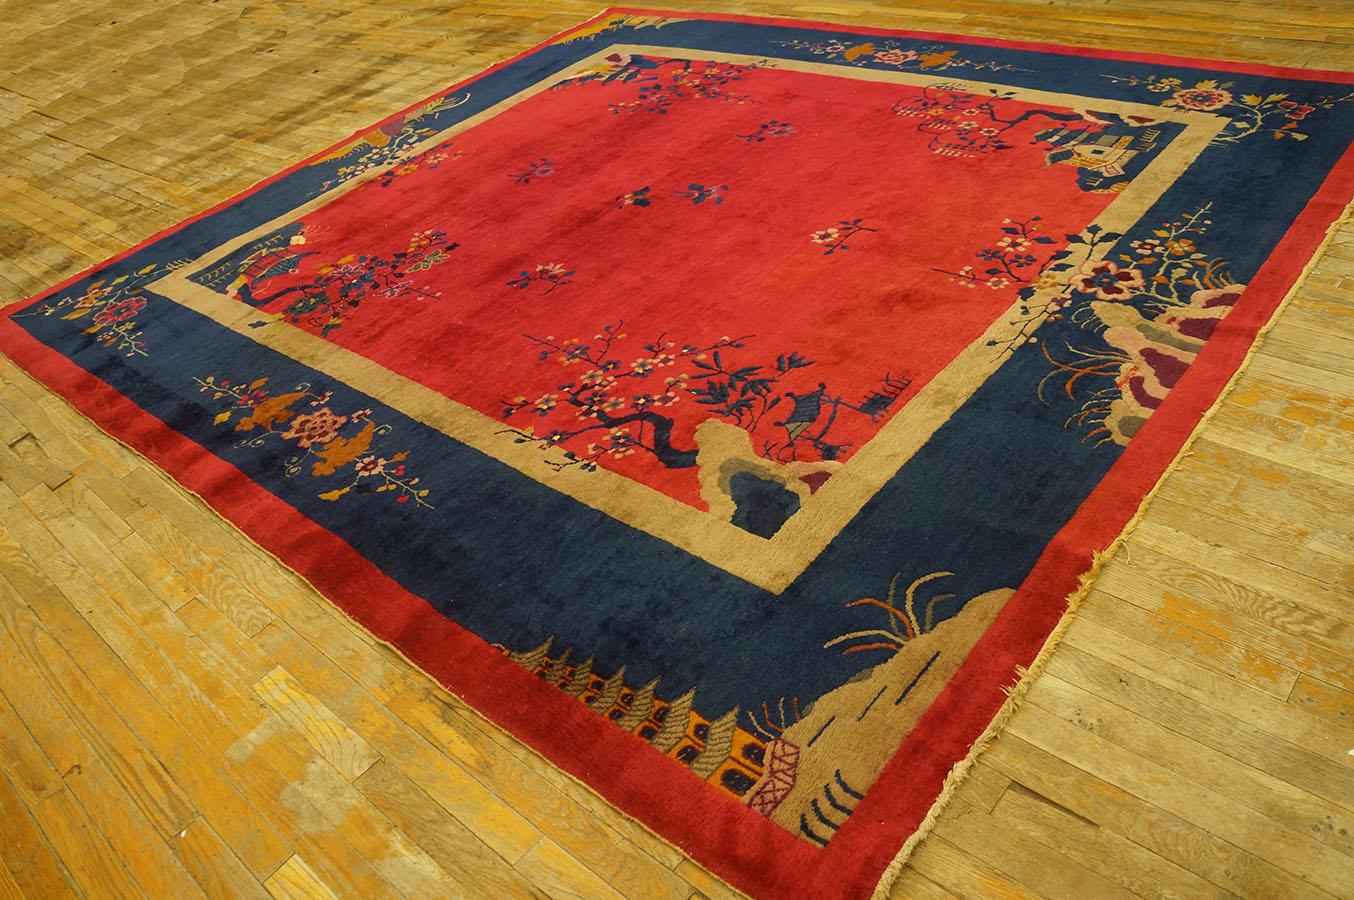 1920s Chinese Art Deco Carpet ( 9' x 9' 9'' - 275 x 297 cm ) For Sale 1